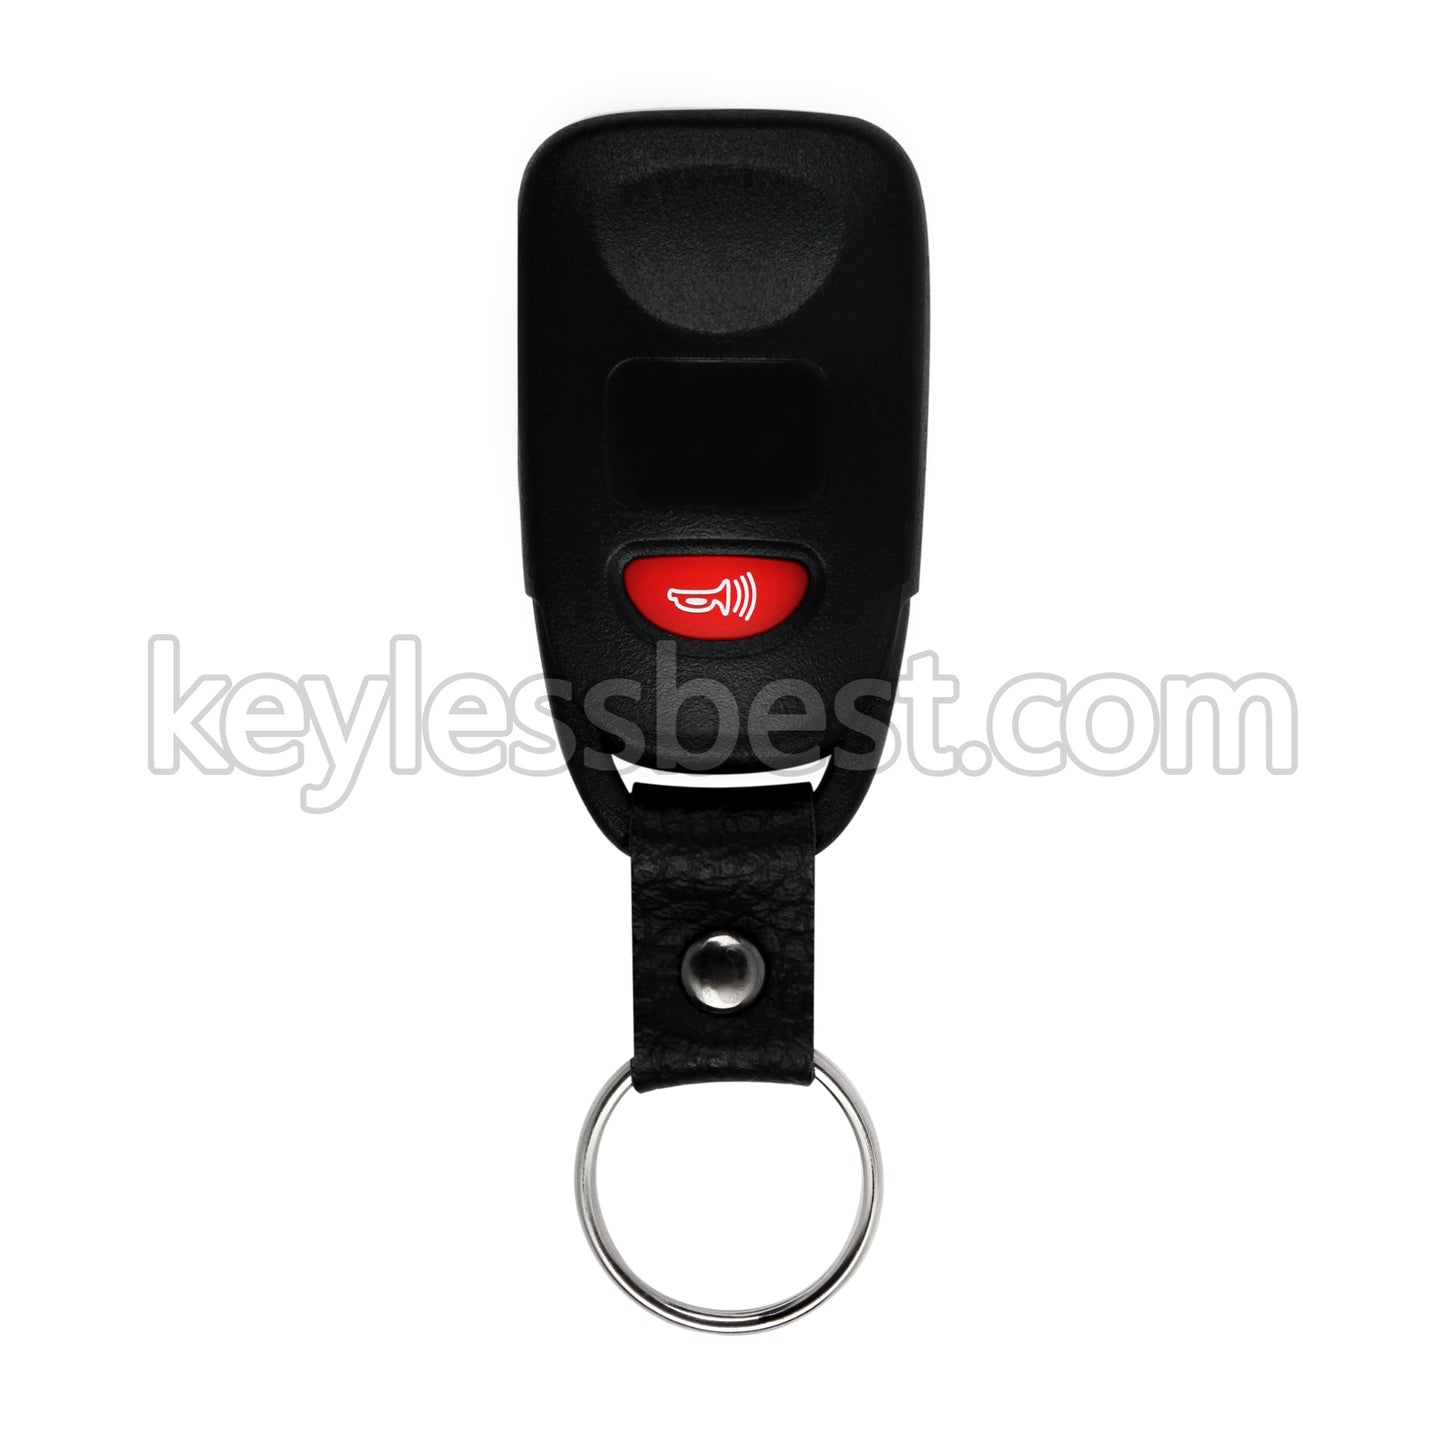 2005 - 2009 Hyundai Tucson / 3 Buttons Remote Key / OSLOKA-320T OSLOKA-110T / 315MHz